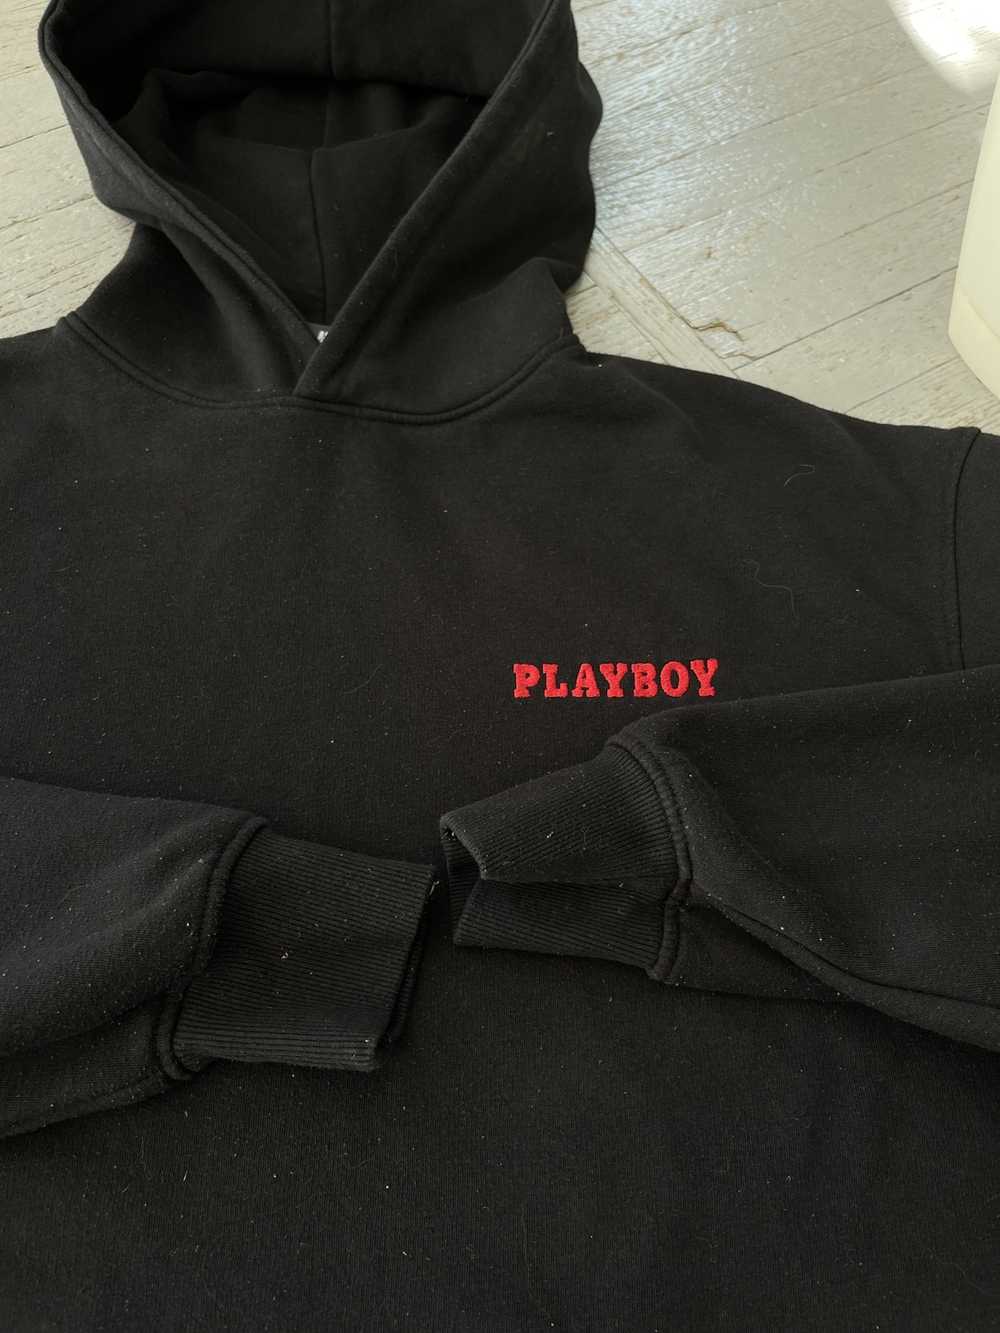 Playboy × Vintage Vintage Playboy Hooded Sweatshi… - image 5